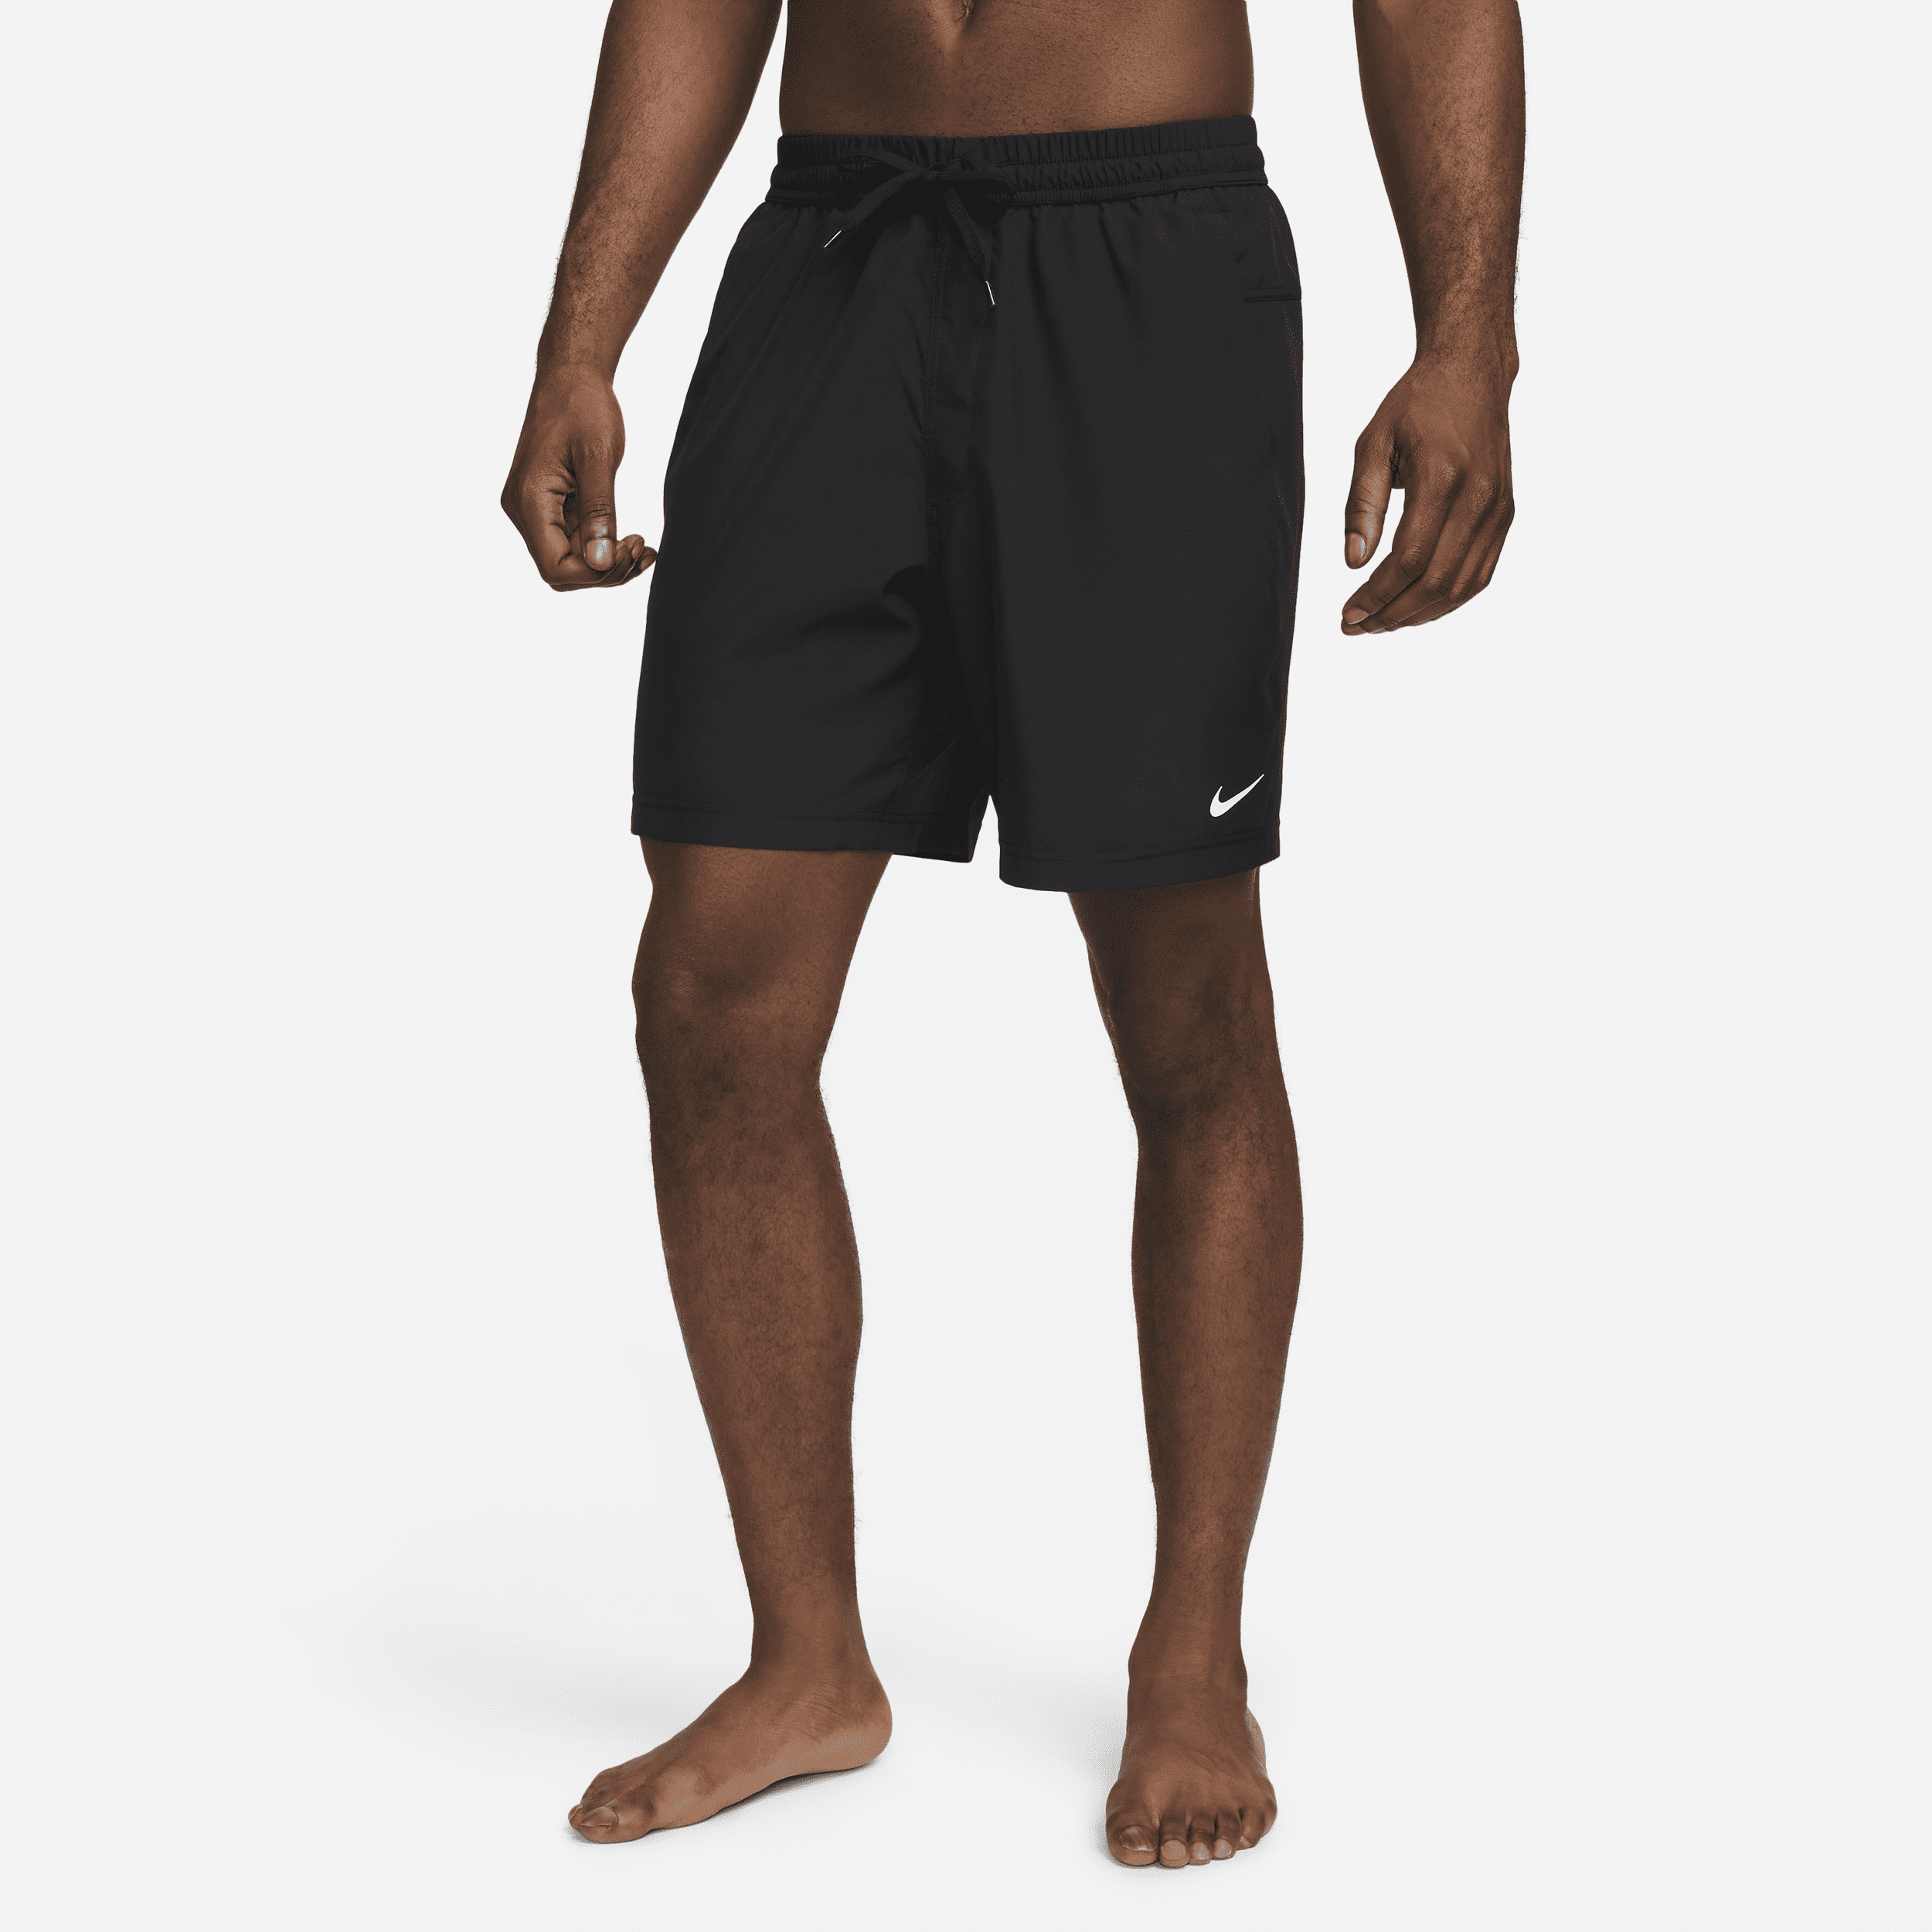 Nike Form Dri-FIT multifunctionele herenshorts zonder binnenbroek (18 cm) - Zwart